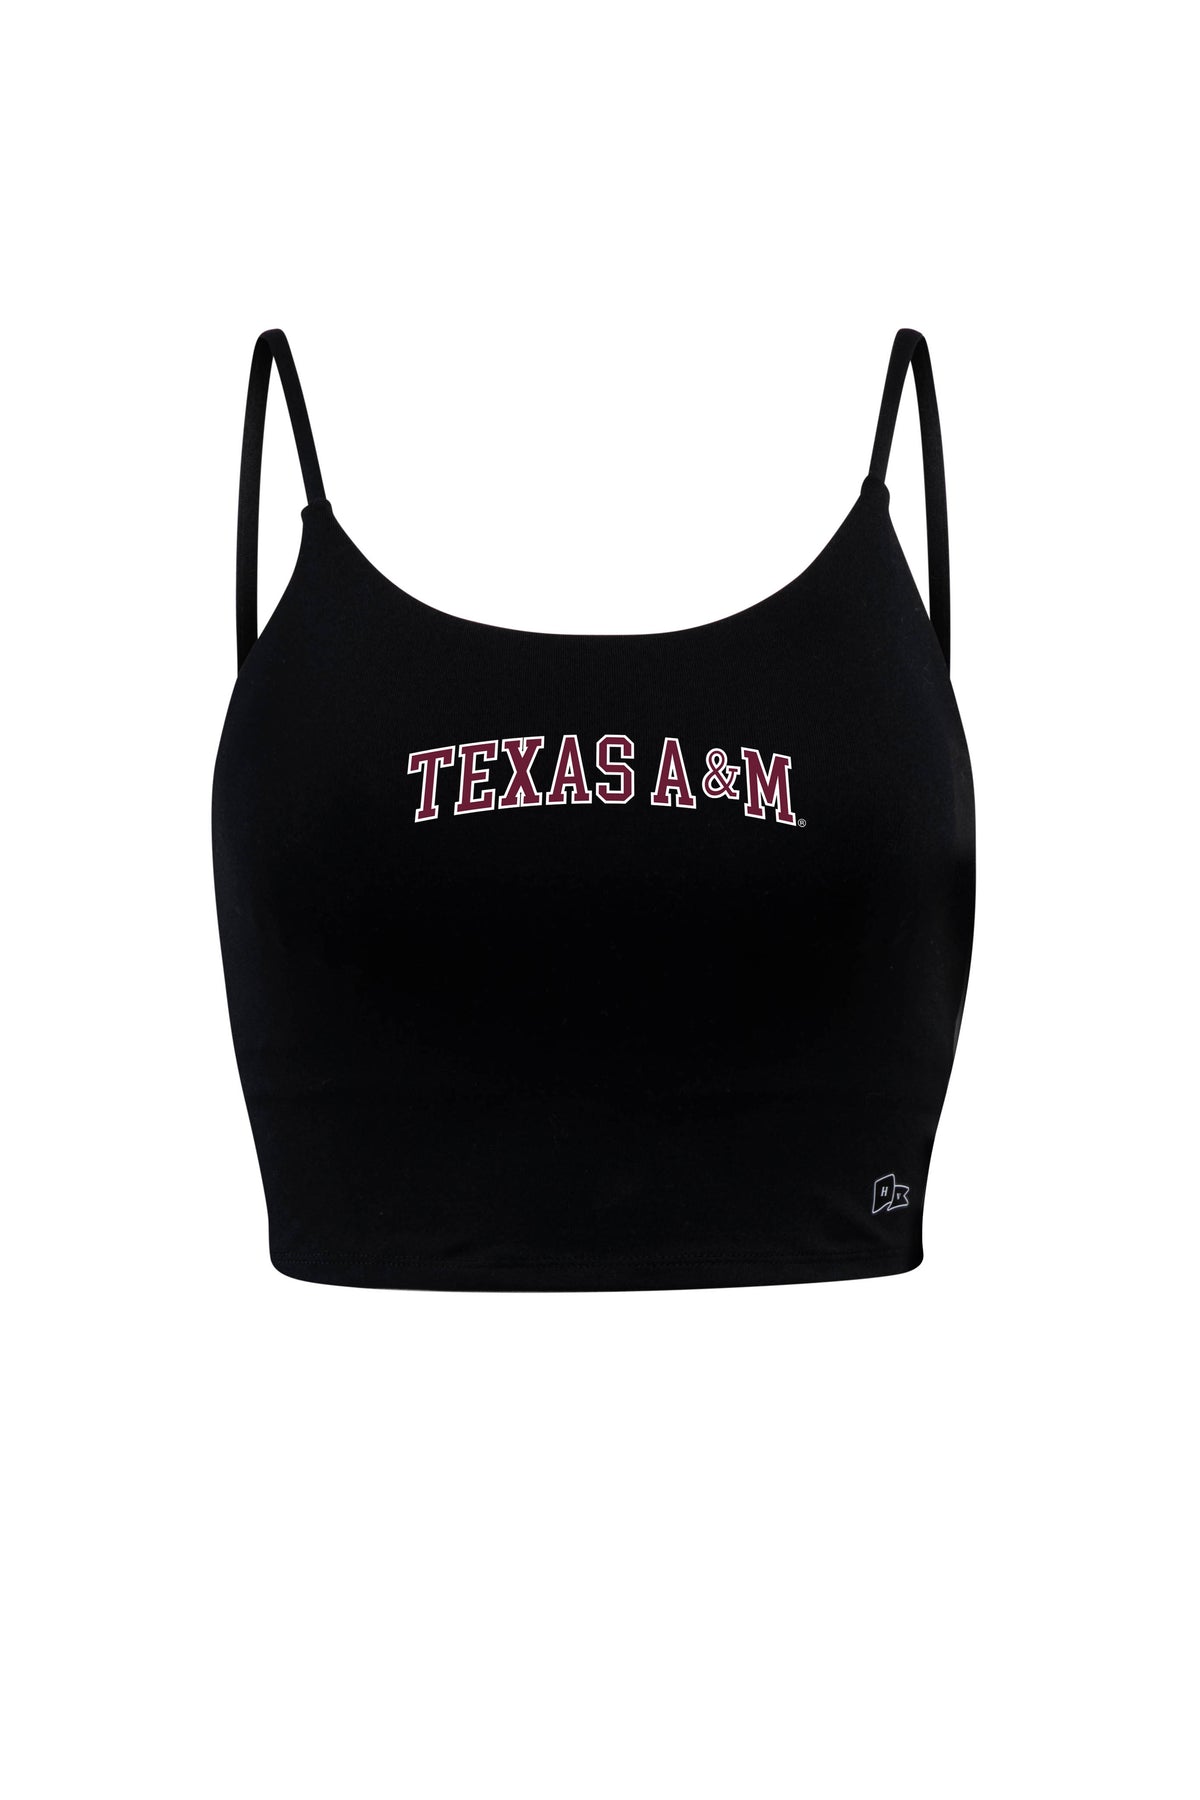 Texas A&M University Bra Tank Top